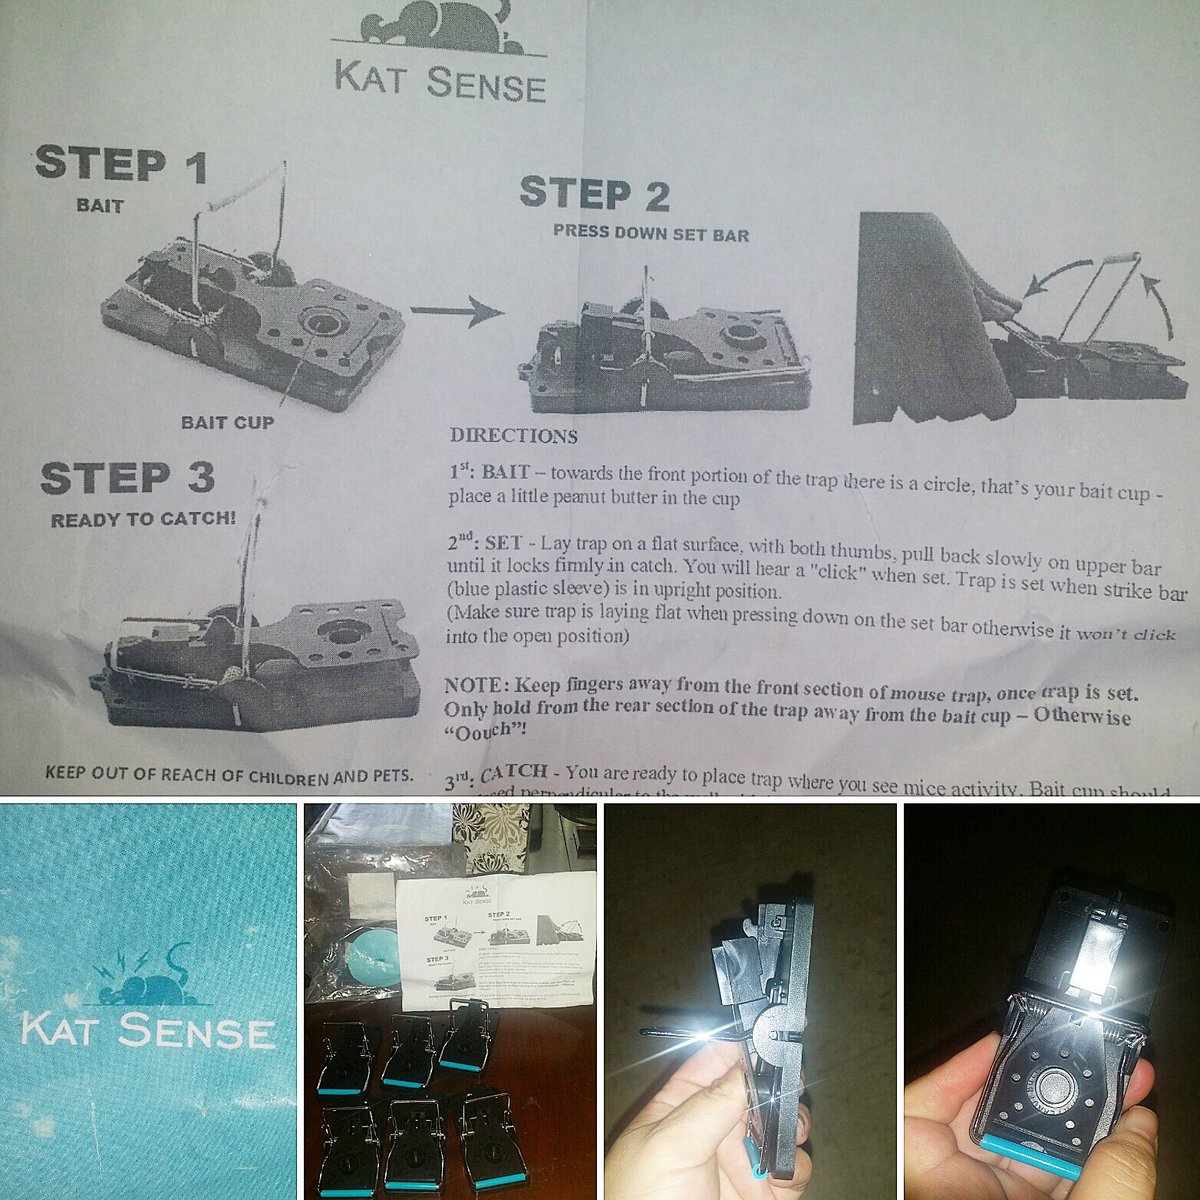 Set of 6 Mouse Traps  By Kat Sense®

amazon.com/dp/B01FROLO12

#KatSense #MouseTraps #MouseTrap #mice